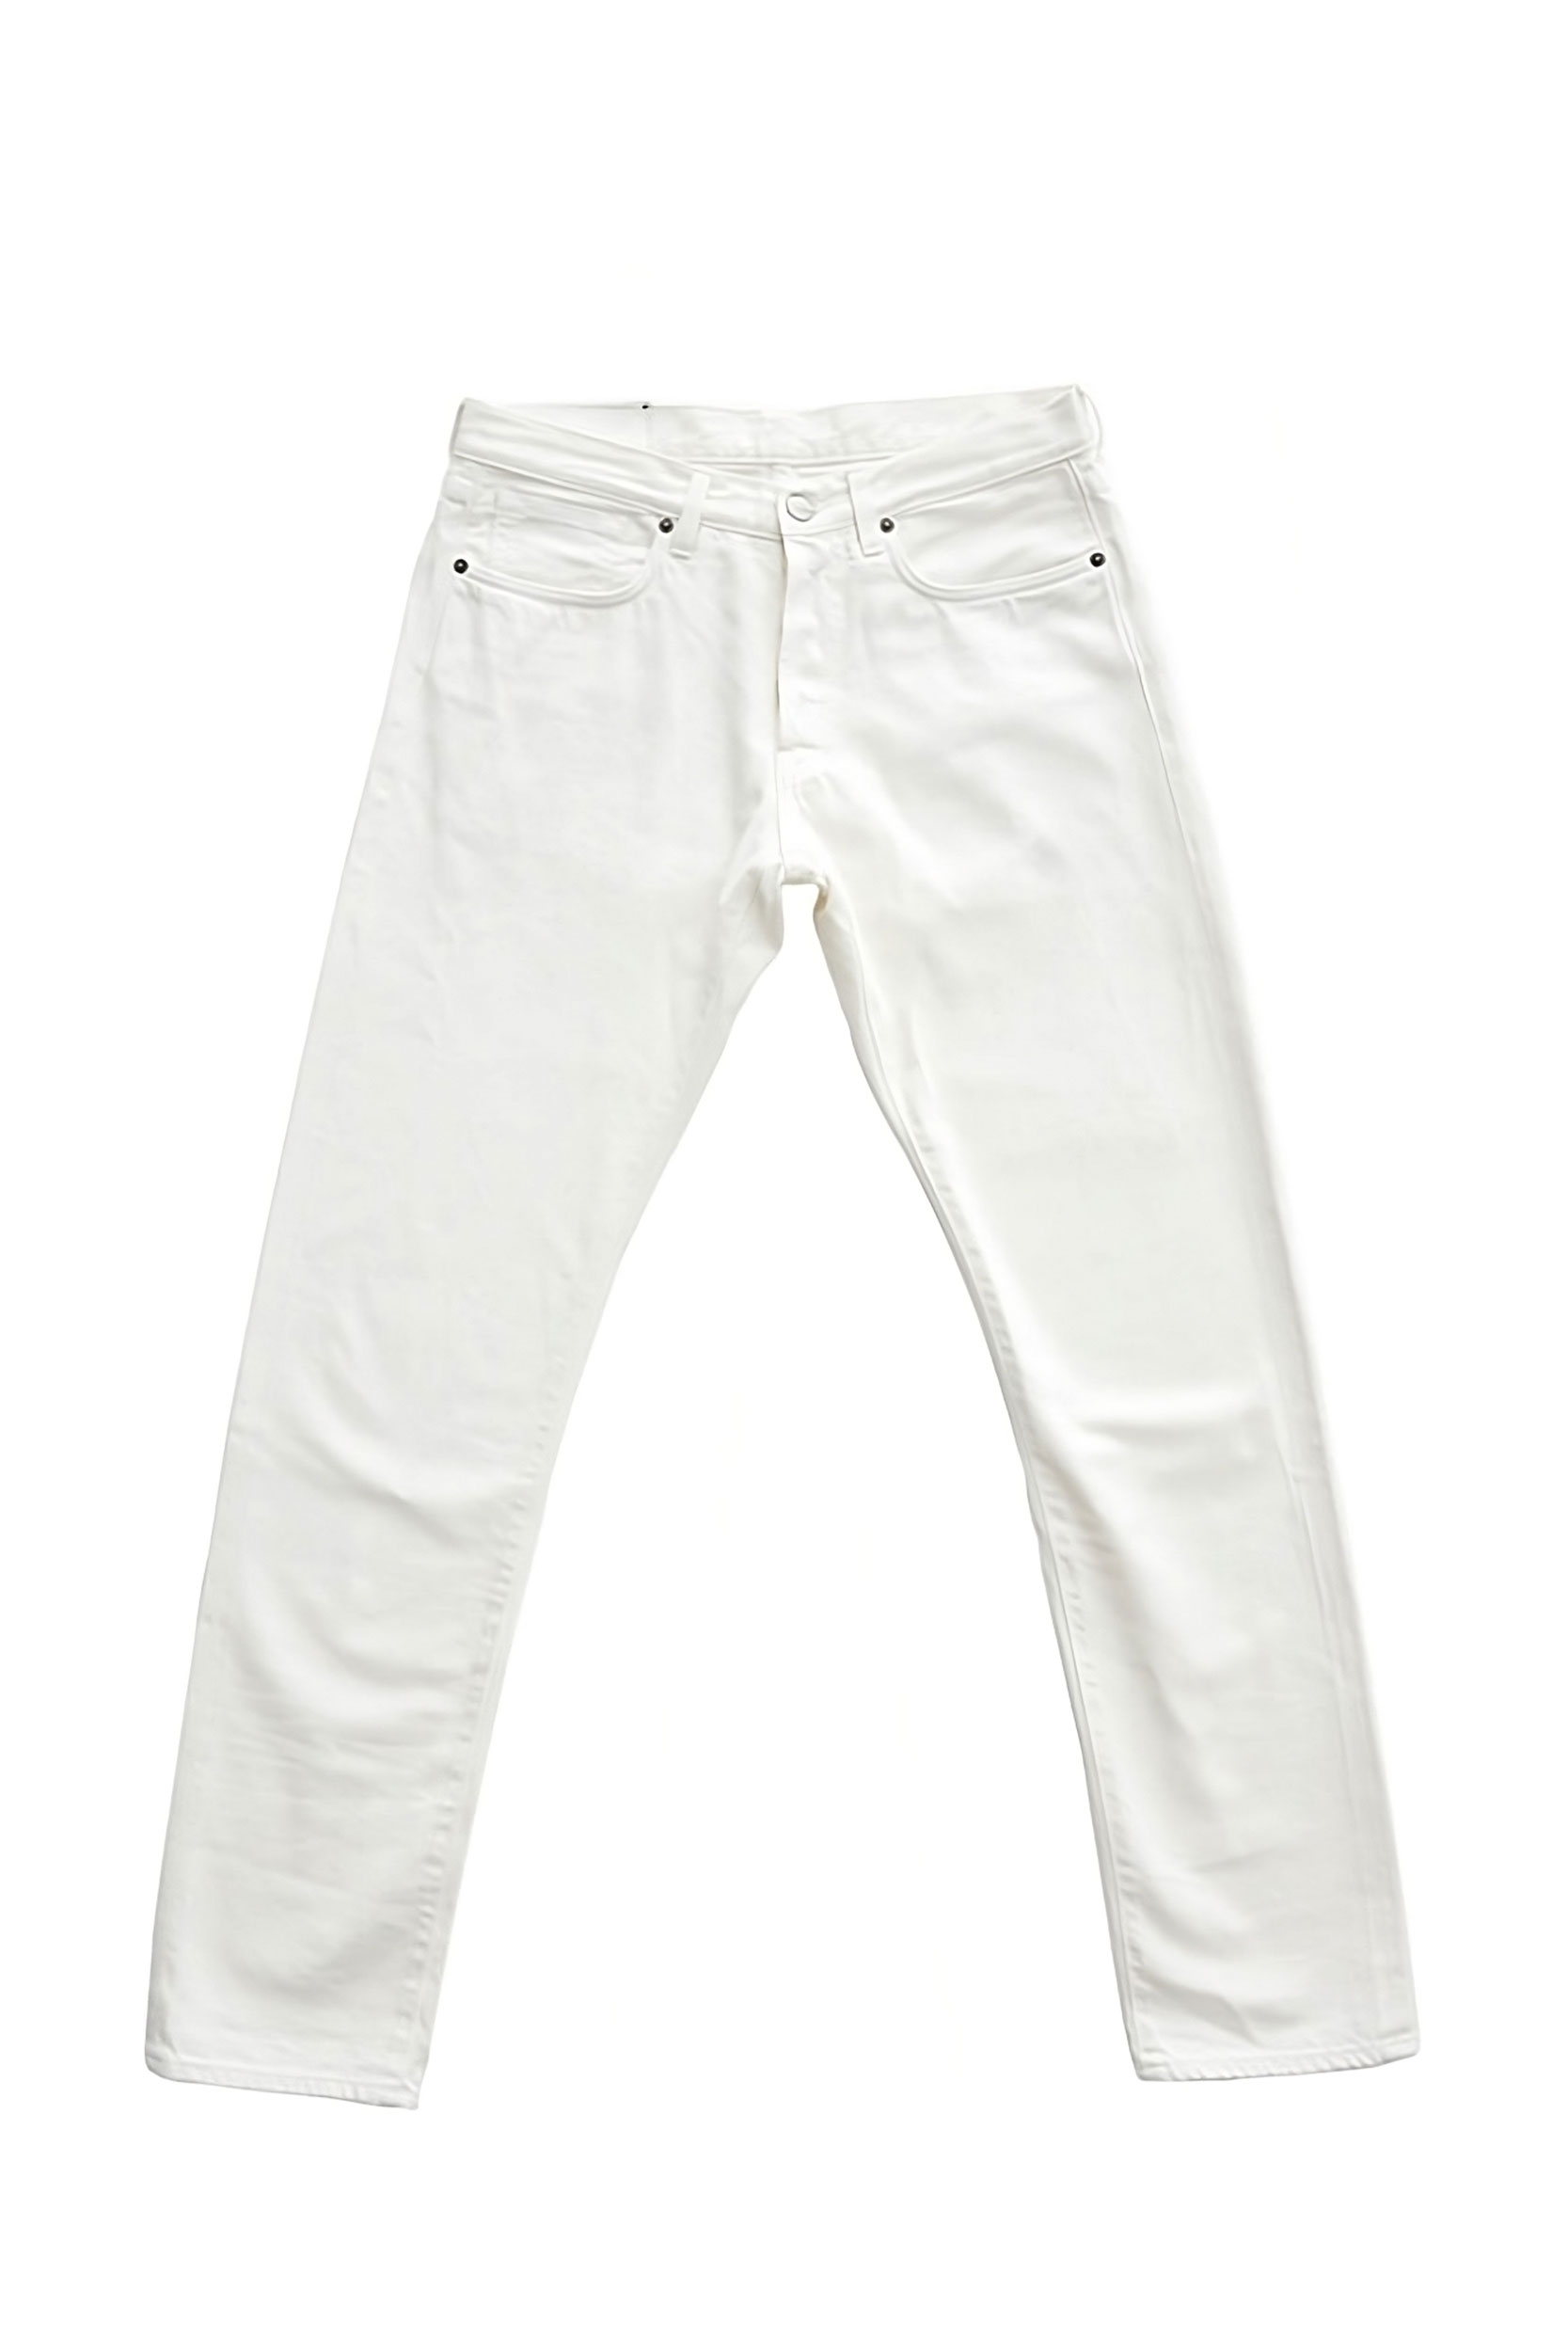 Buy White Jeans for Women Online in India - Westside